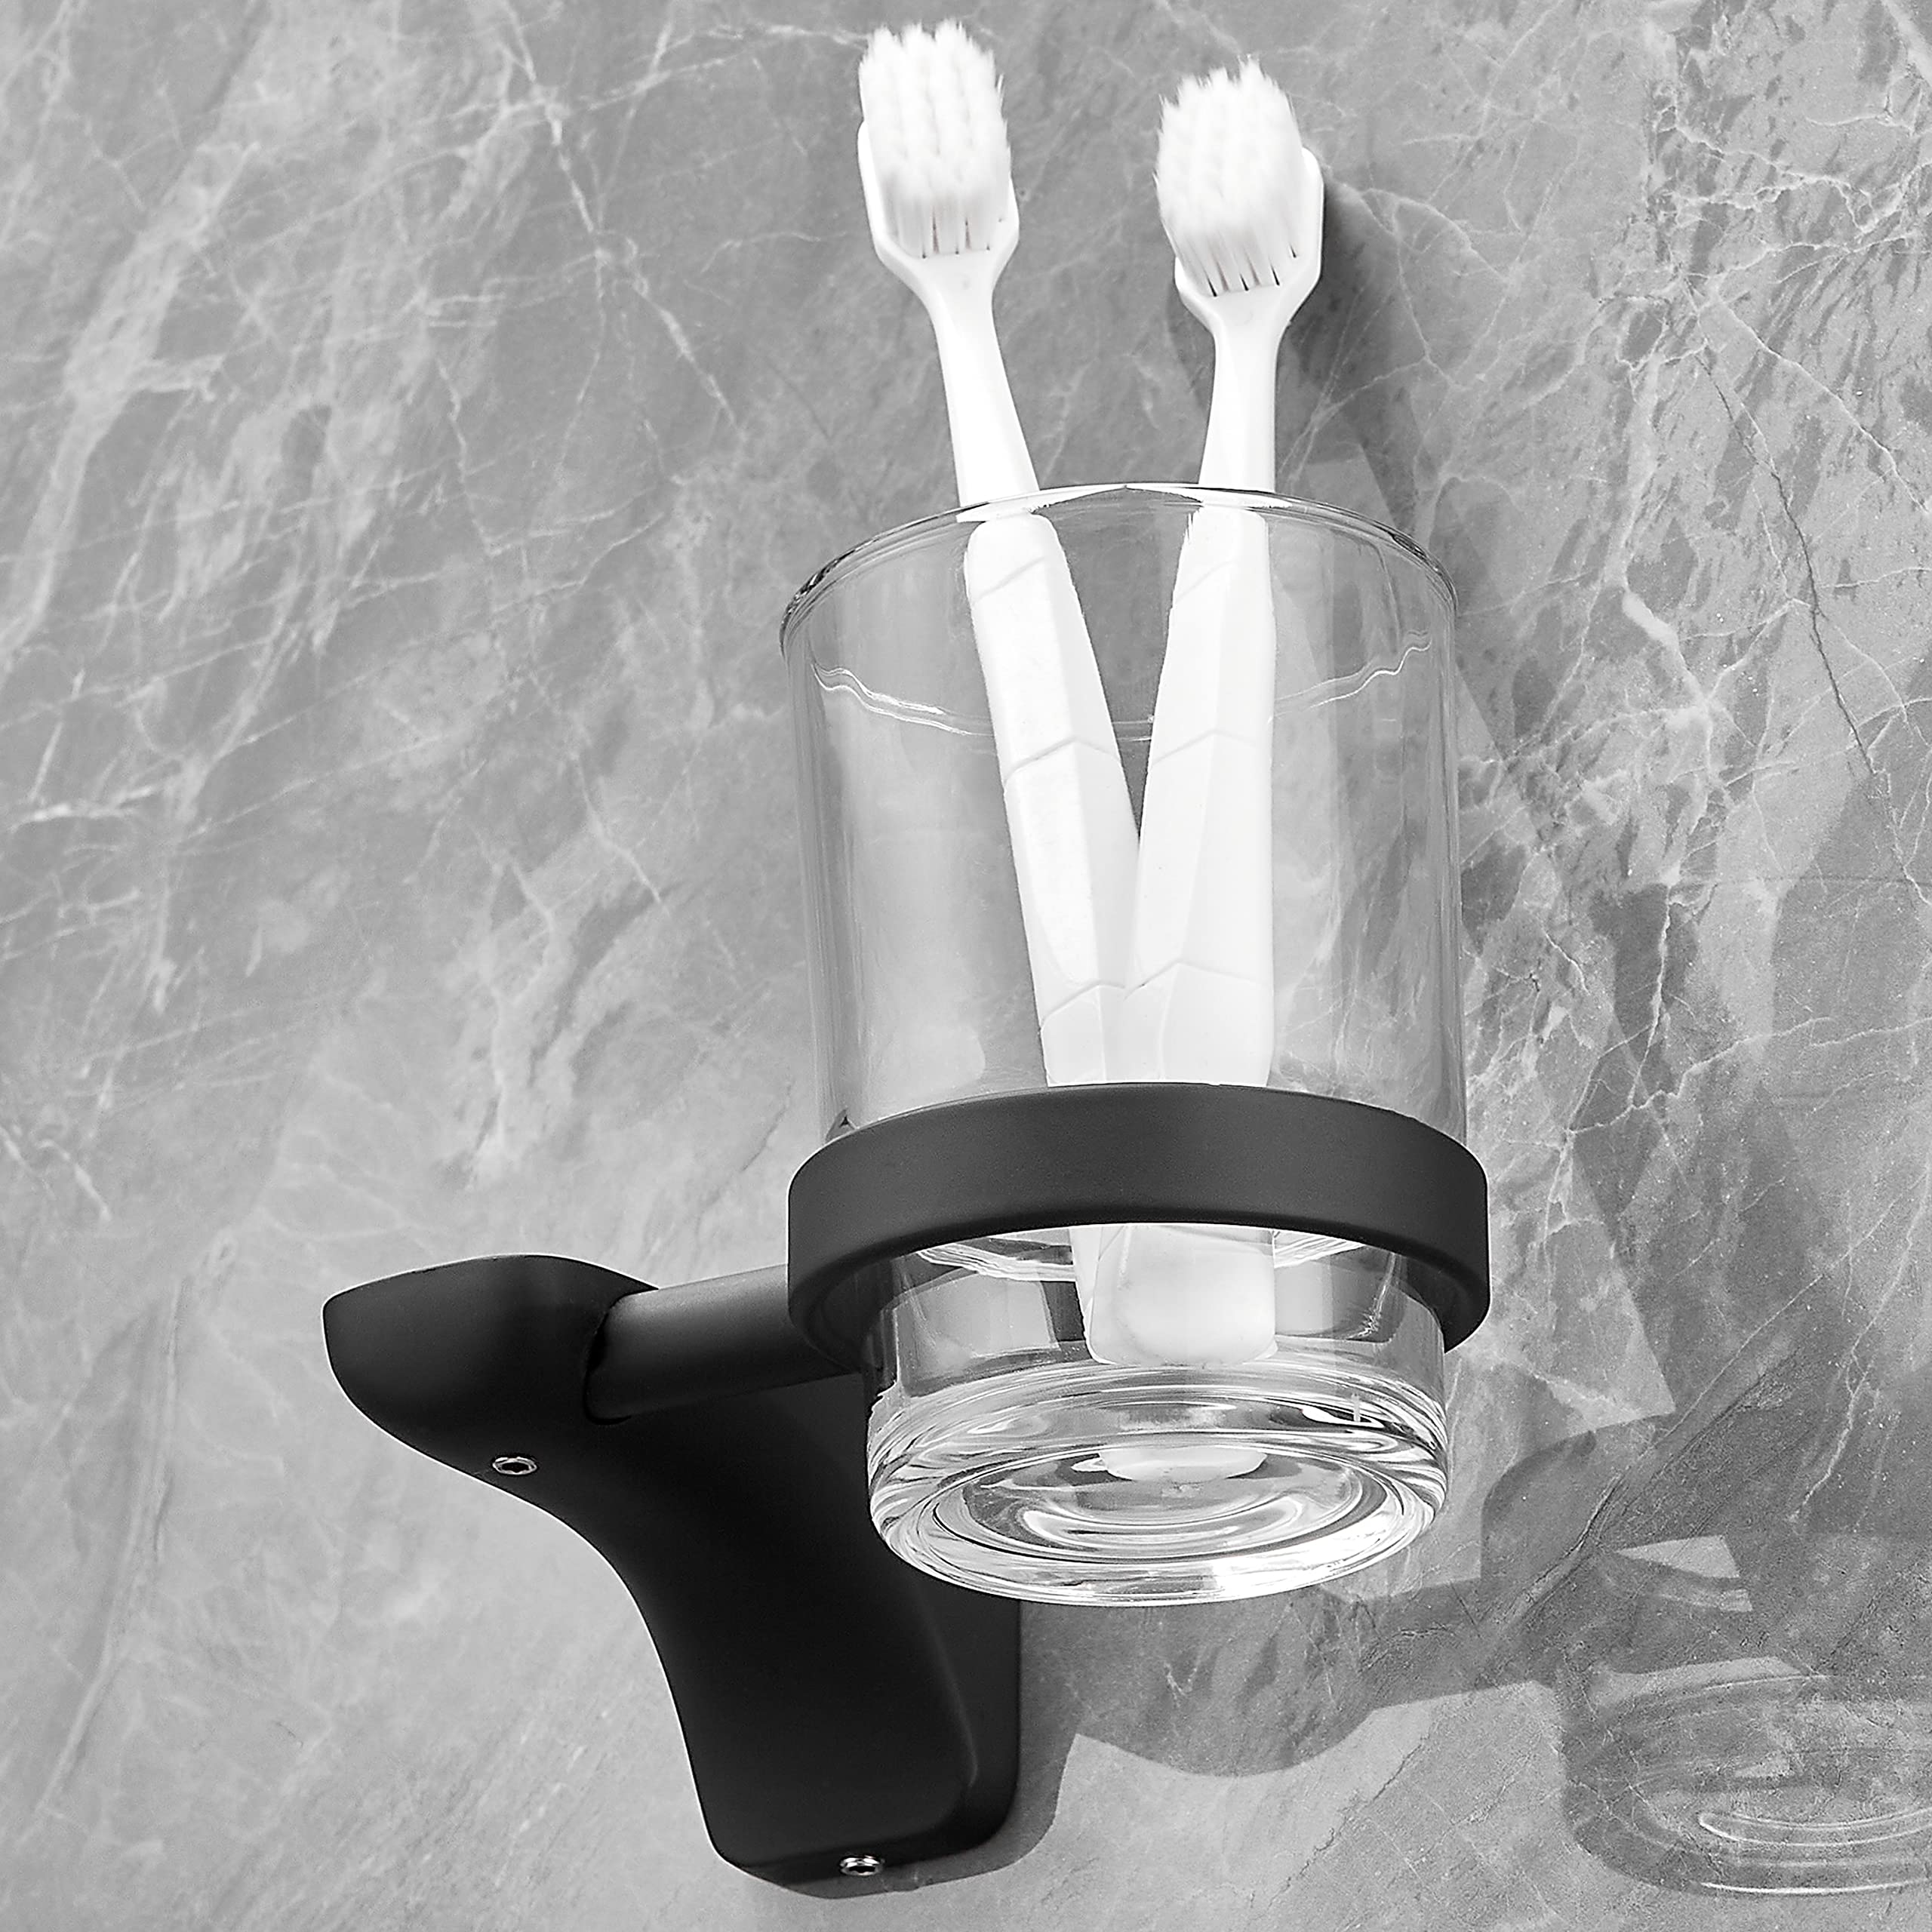 Plantex Space Aluminium Toothbrush Holder/Tumbler Holder for Bathroom/Bathroom Accessories (973, Black) – Pack of 1